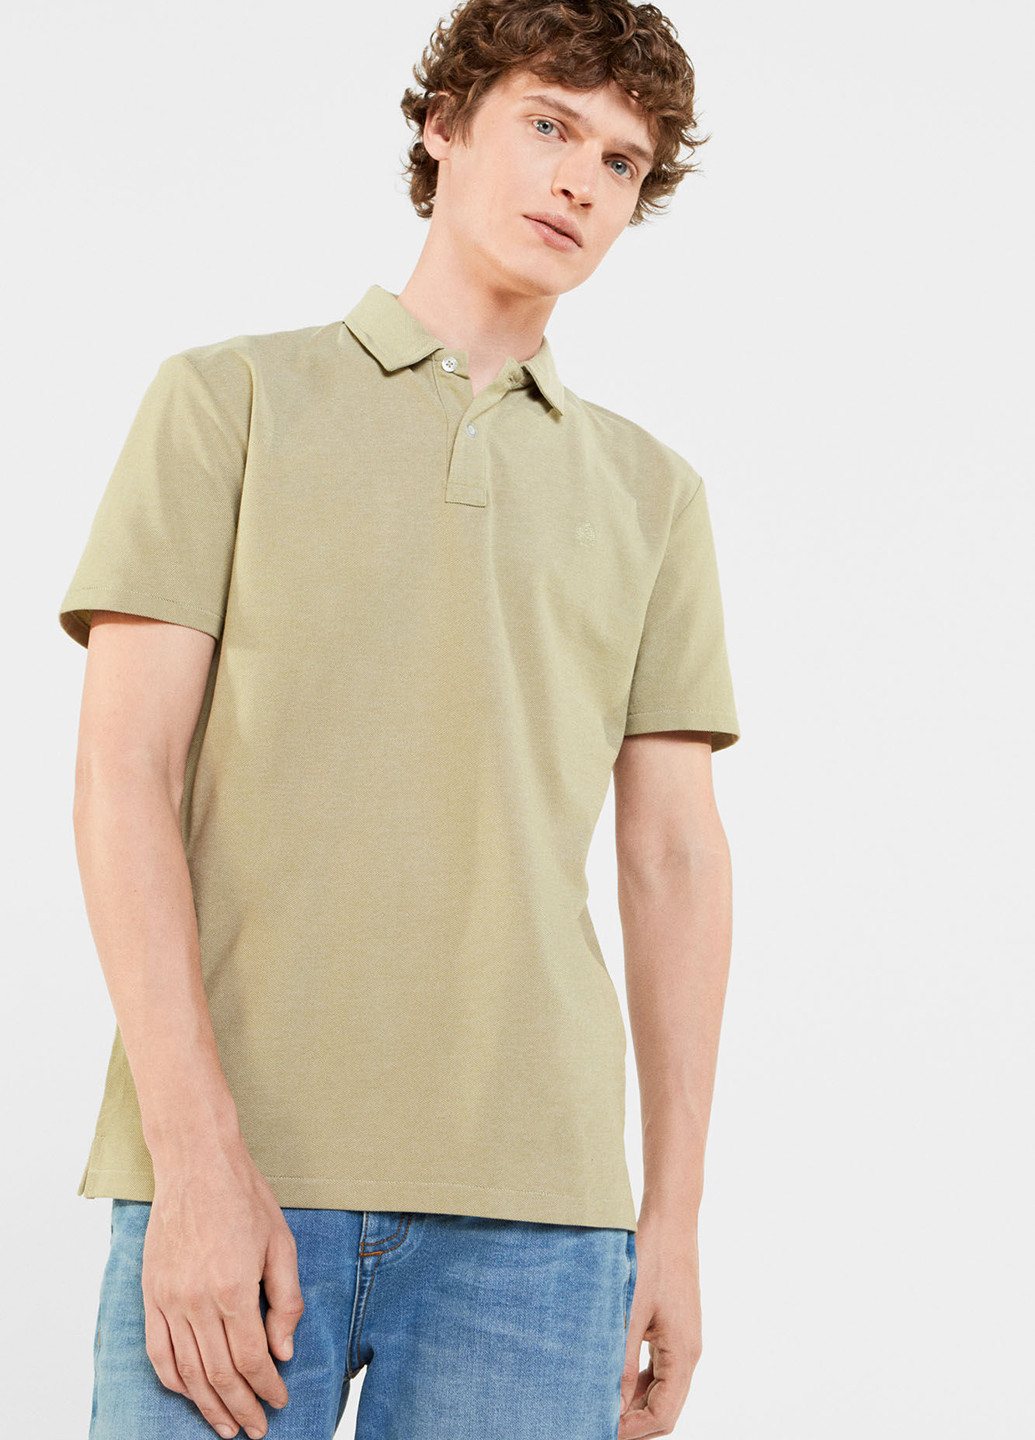 Оливковая (хаки) футболка-поло для мужчин Springfield однотонная